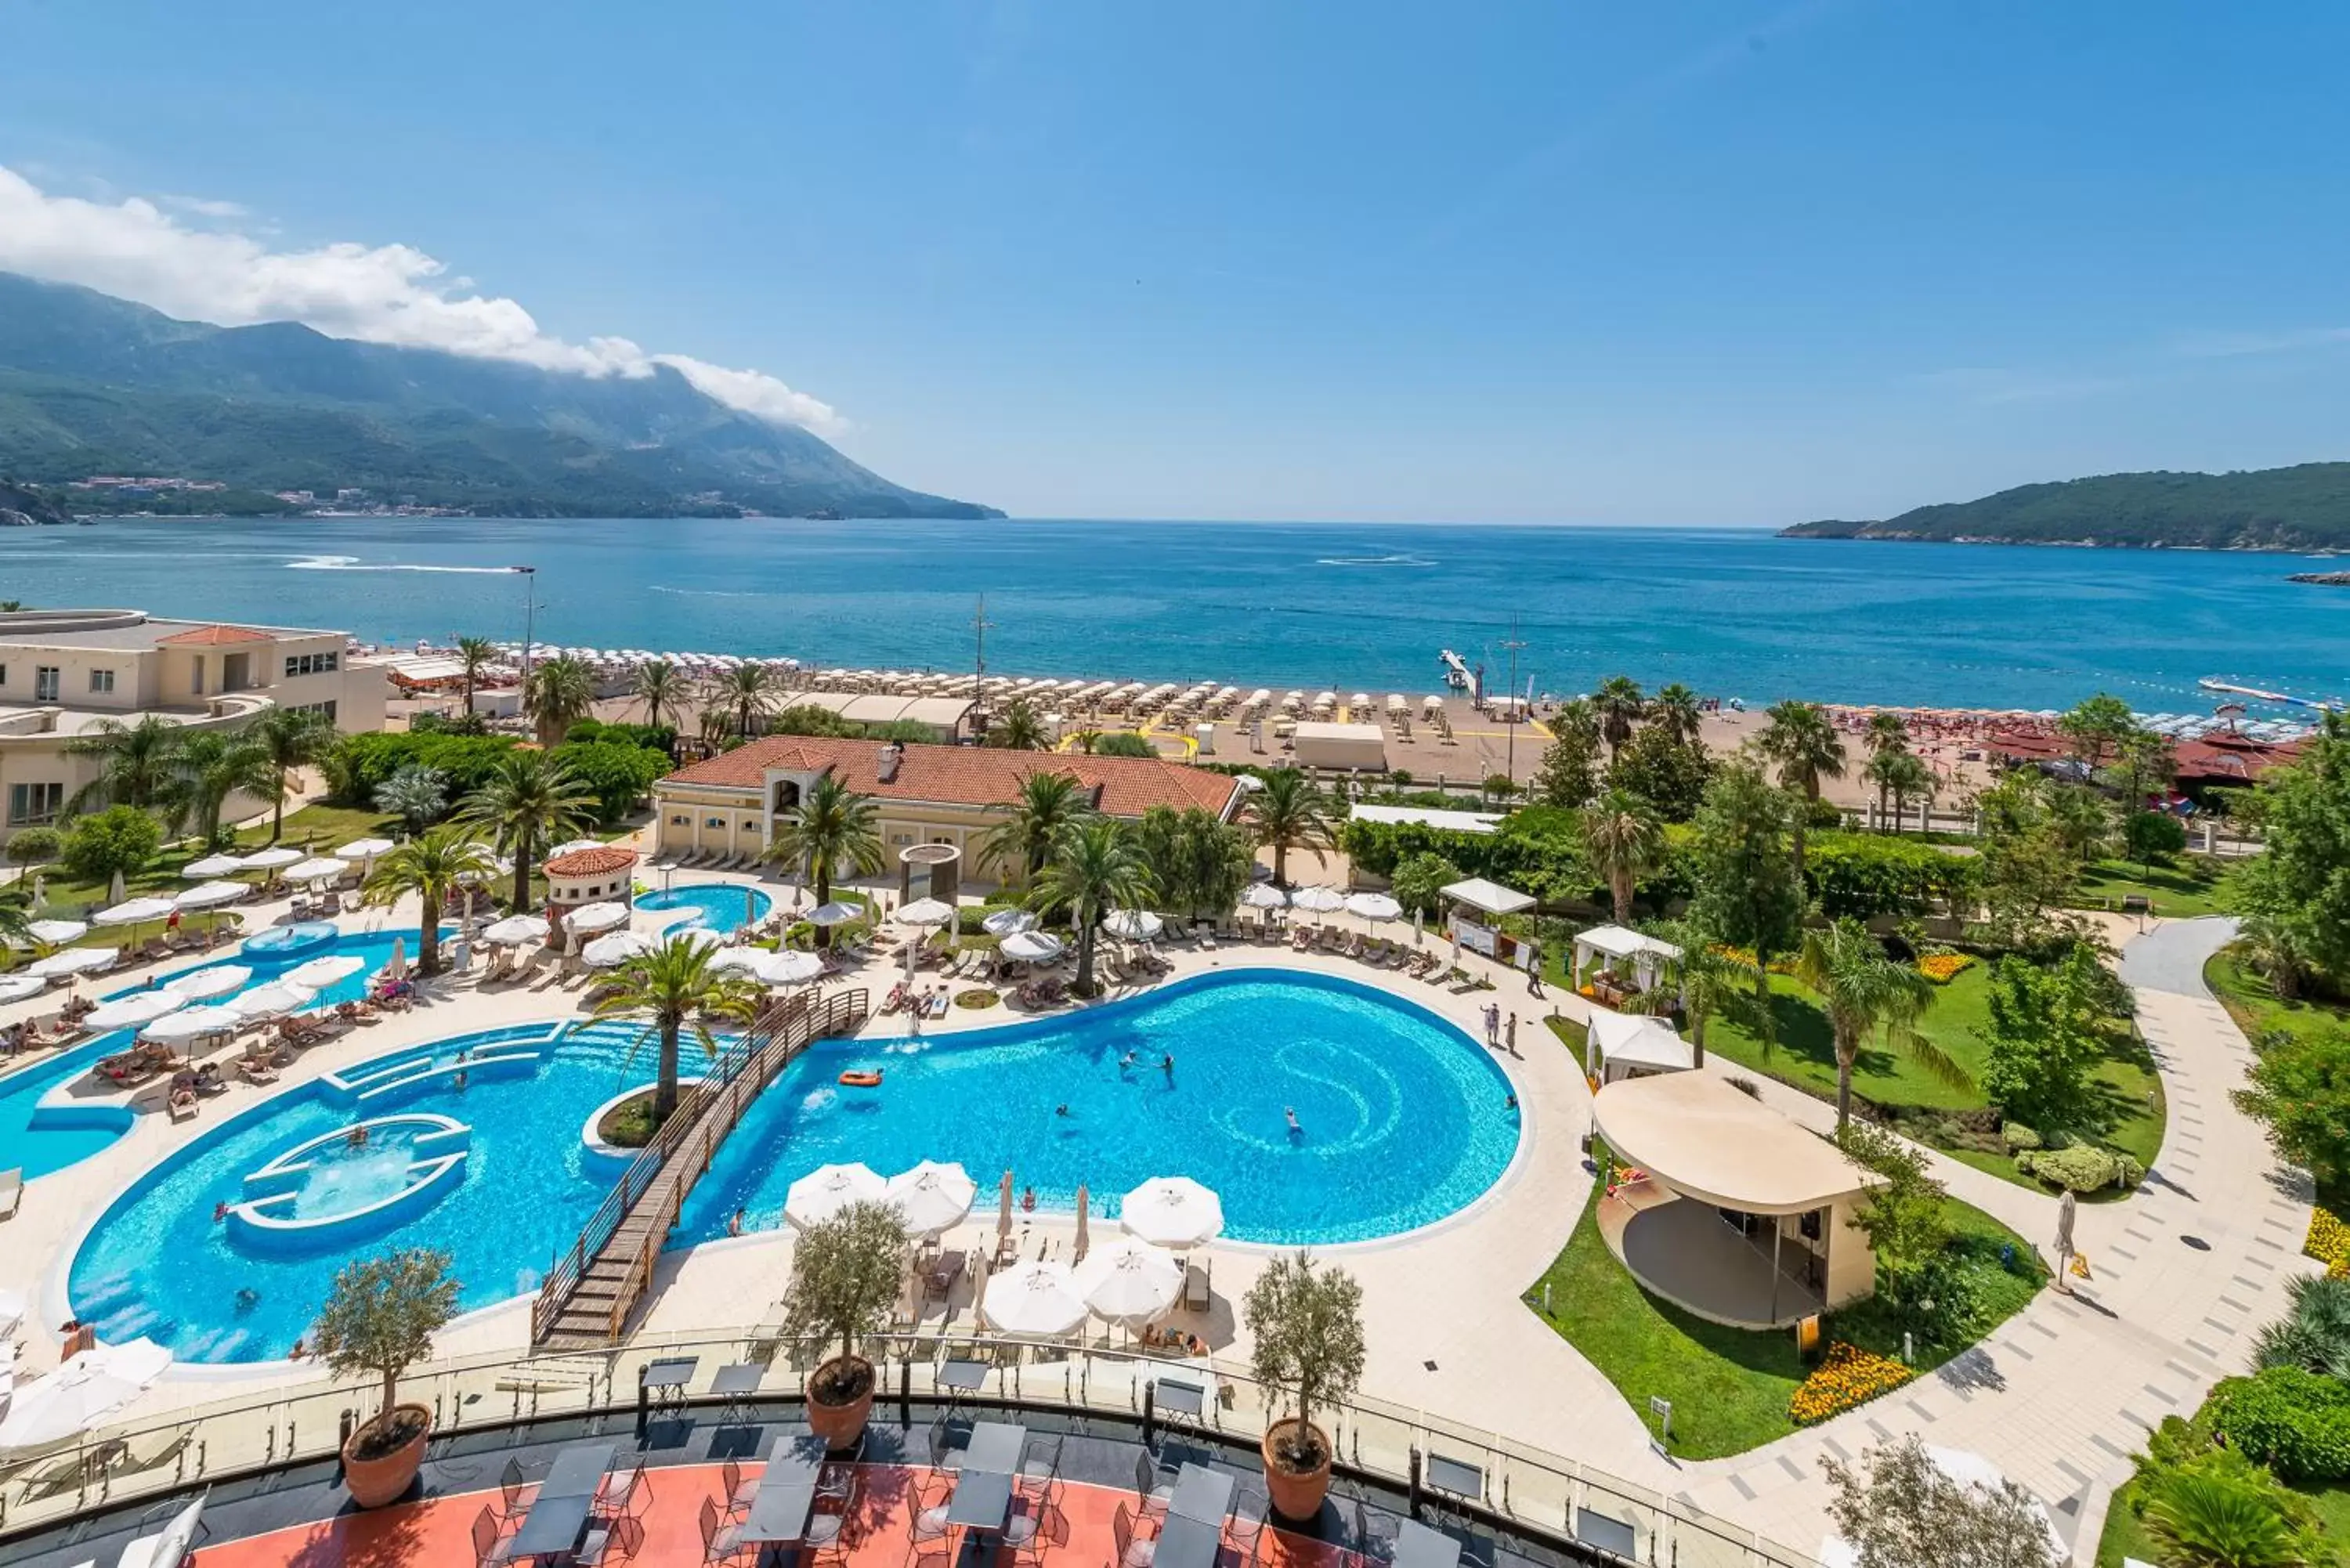 Nearby landmark, Pool View in Splendid Conference & Spa Resort